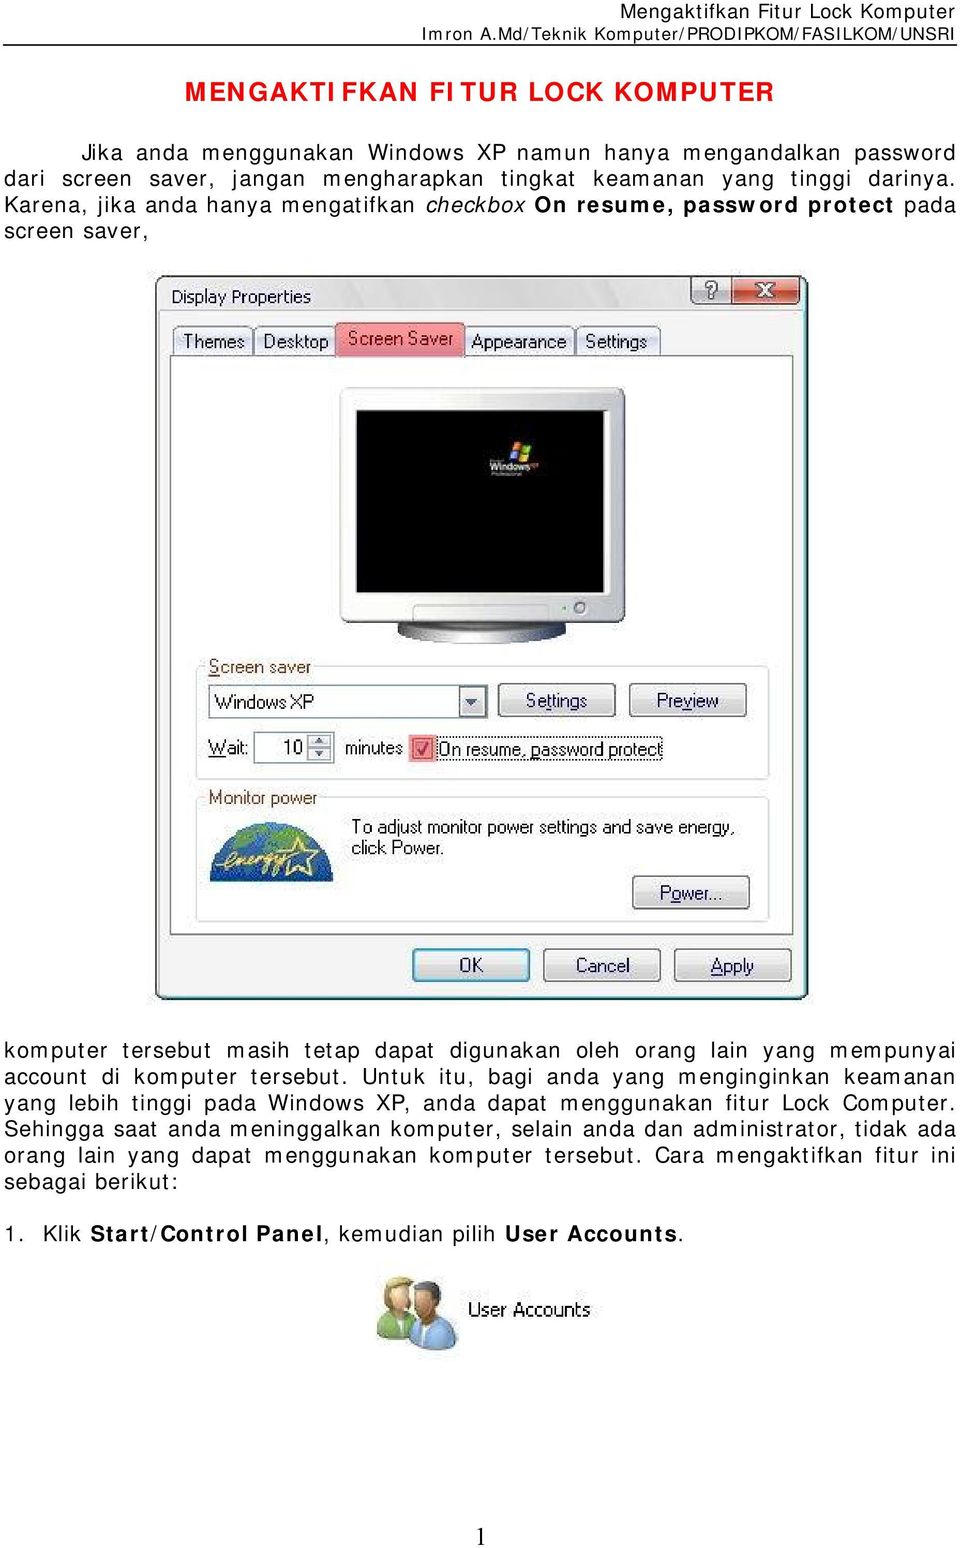 komputer tersebut. Untuk itu, bagi anda yang menginginkan keamanan yang lebih tinggi pada Windows XP, anda dapat menggunakan fitur Lock Computer.